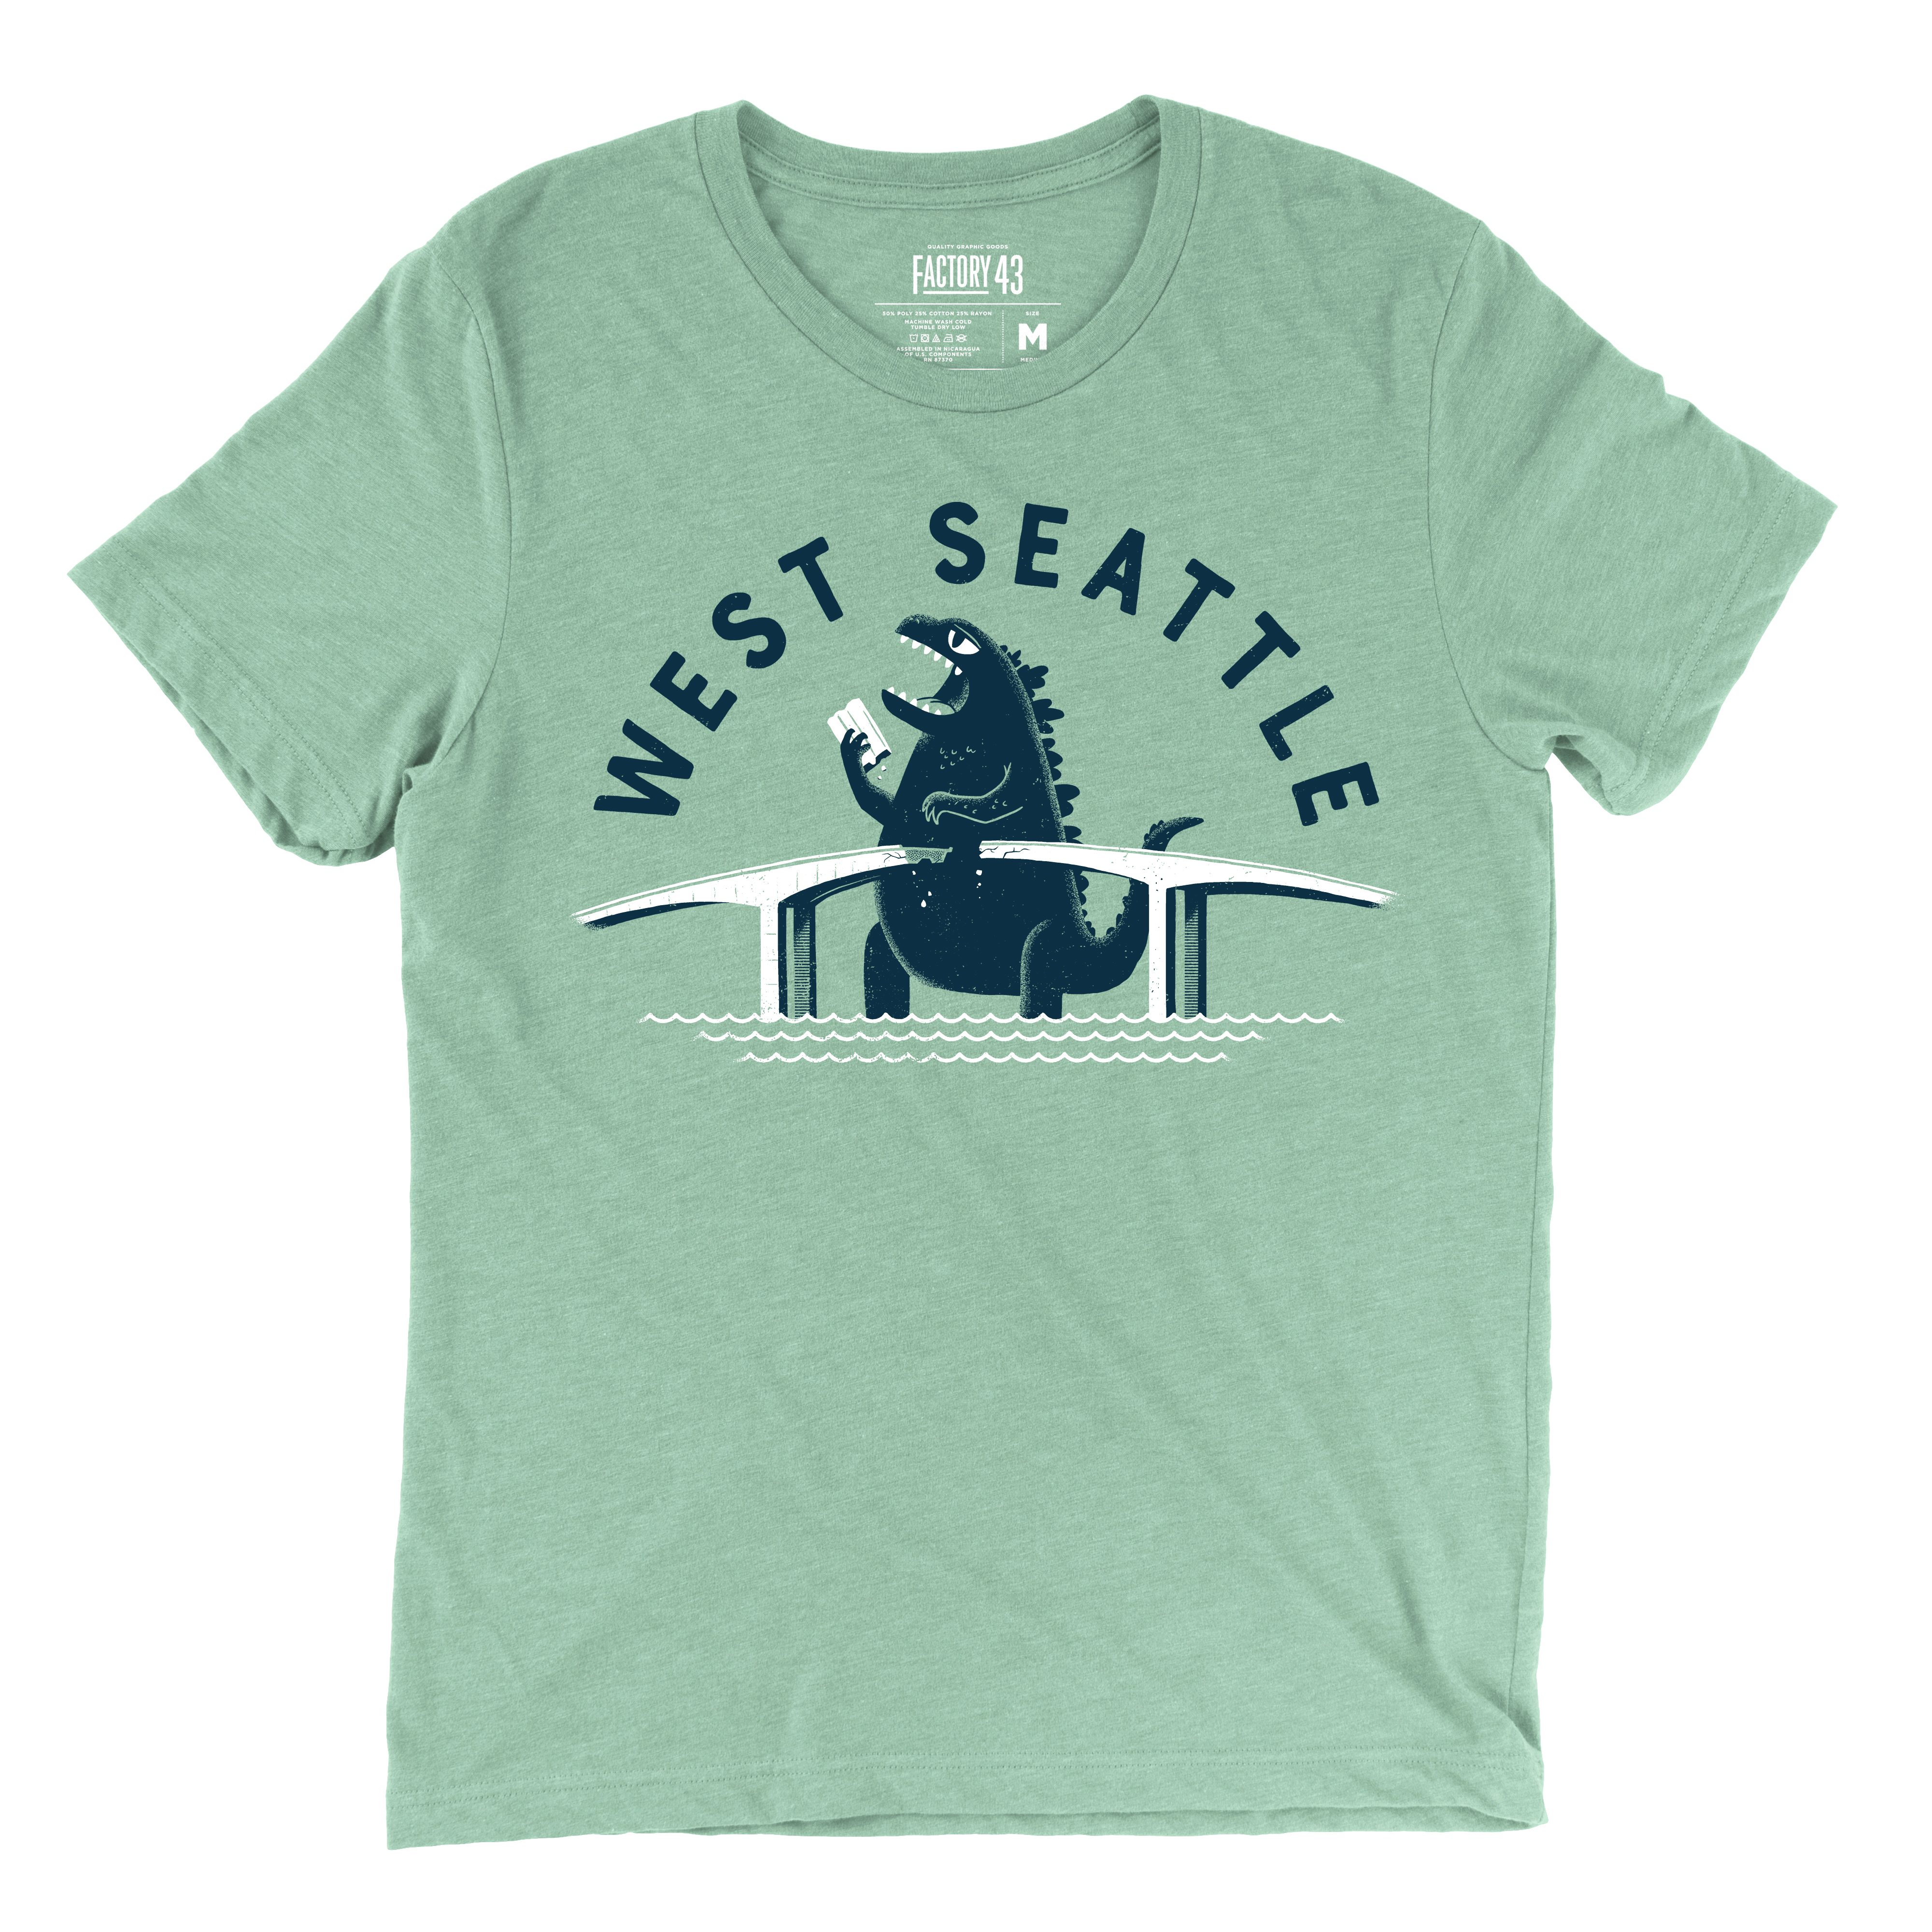 Super soft green mens/womens graphic tshirt of Godzilla or kujuri monster destroying the West Seattle Bridge. 